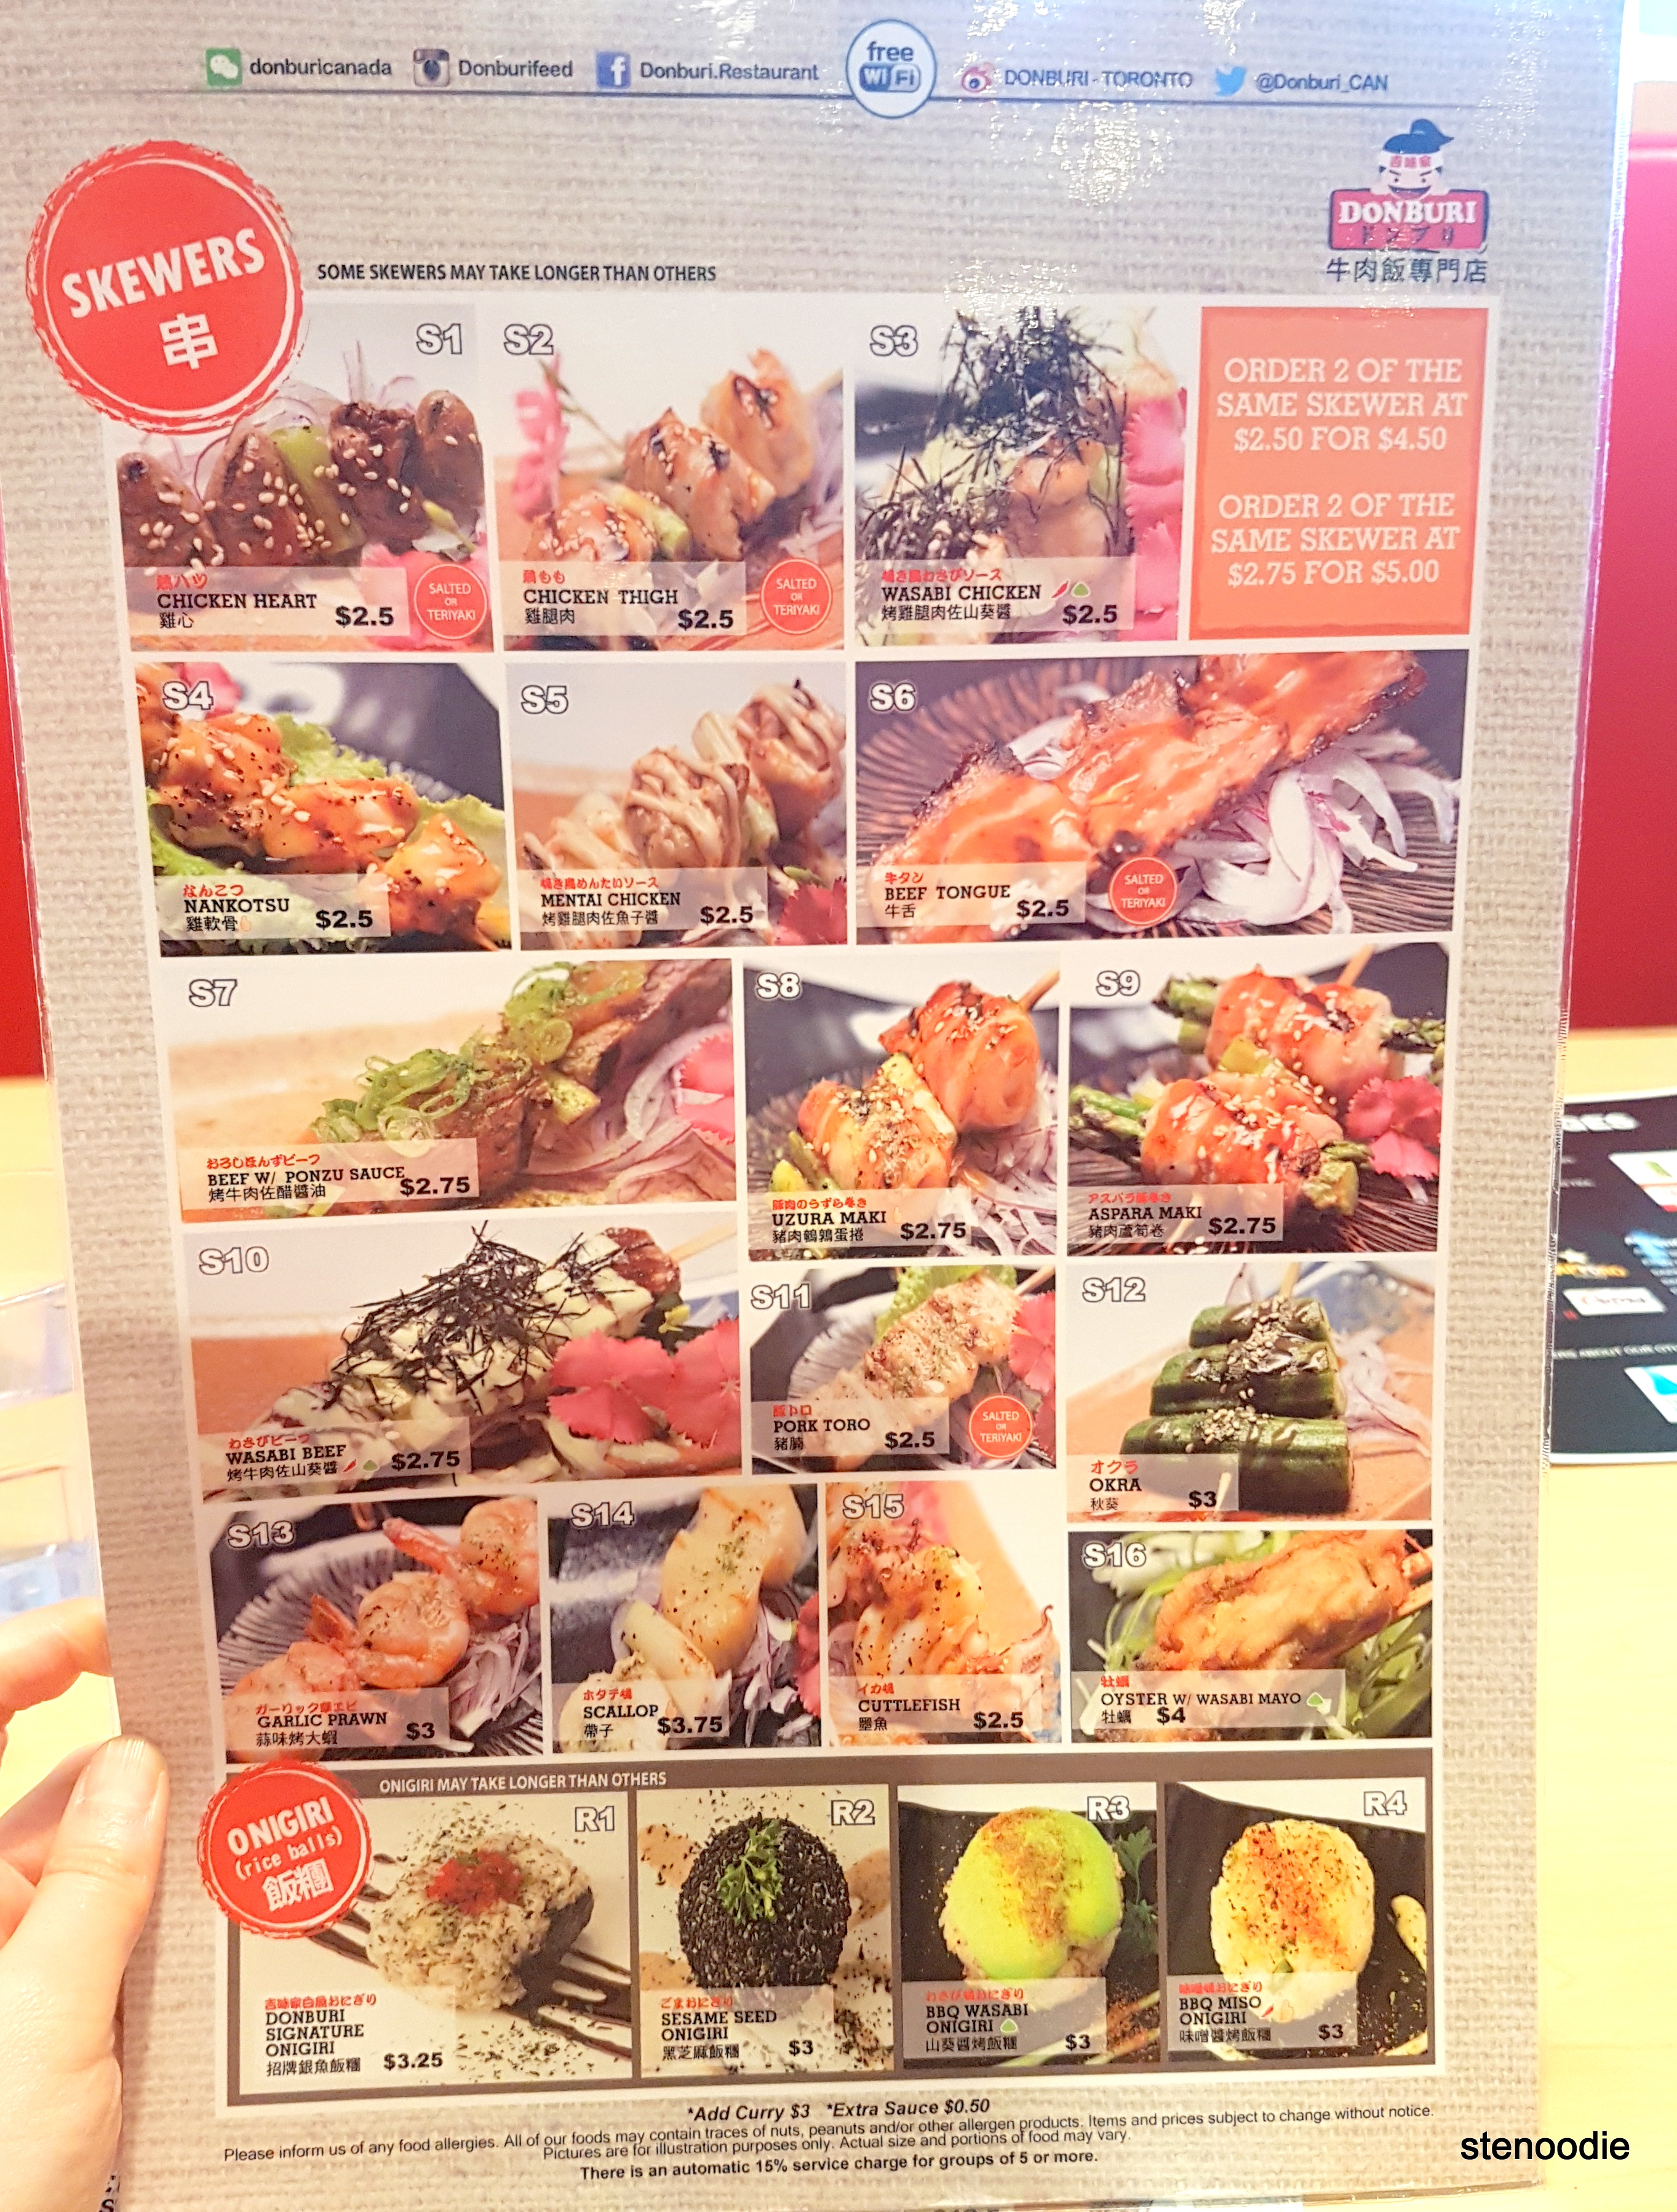  Donburi menu and prices